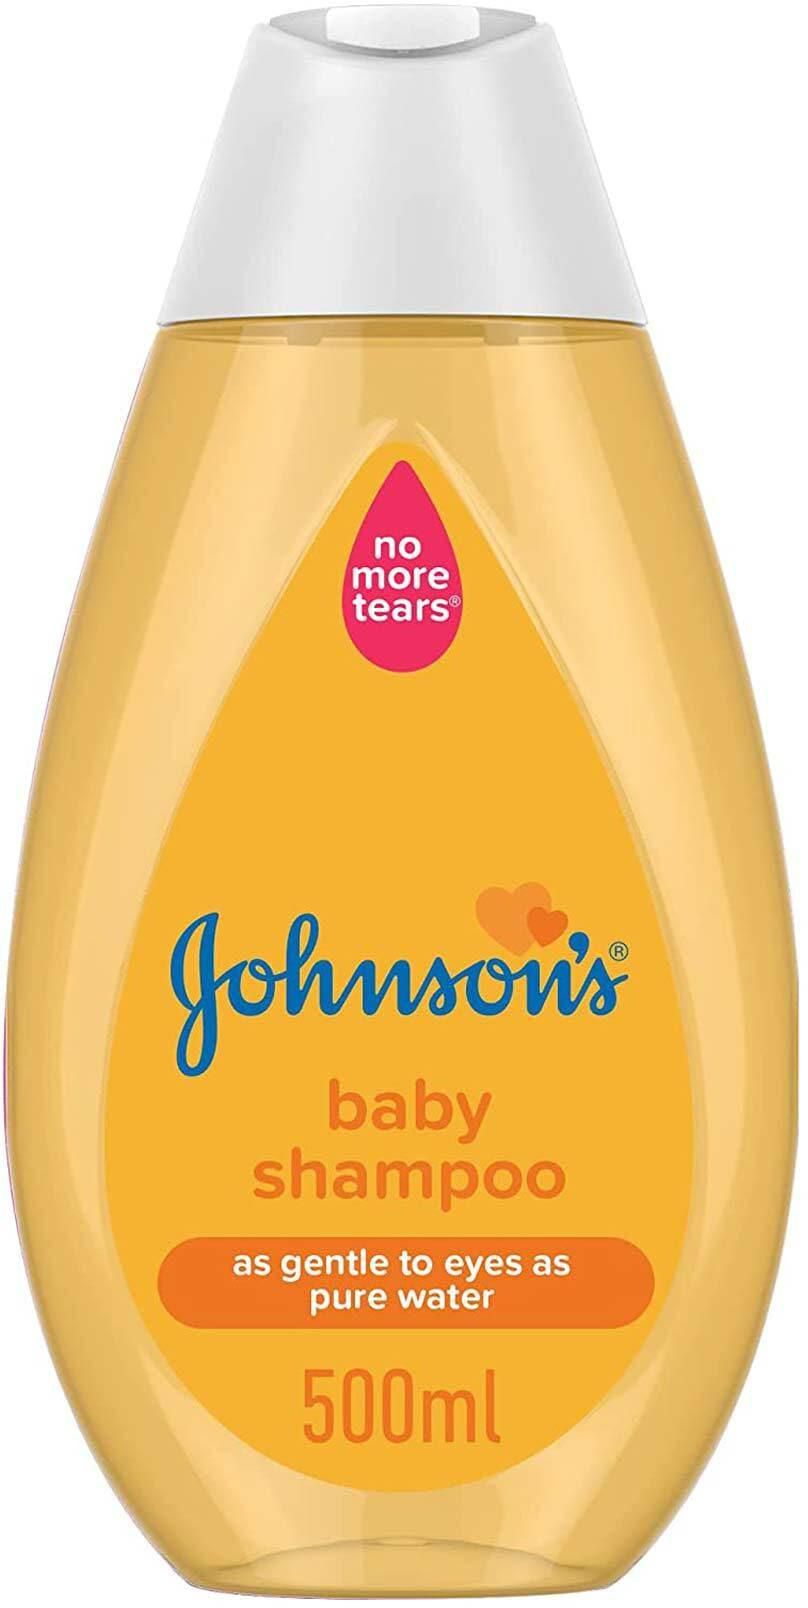 Johnsons Gold Baby Shampoo - 500ml